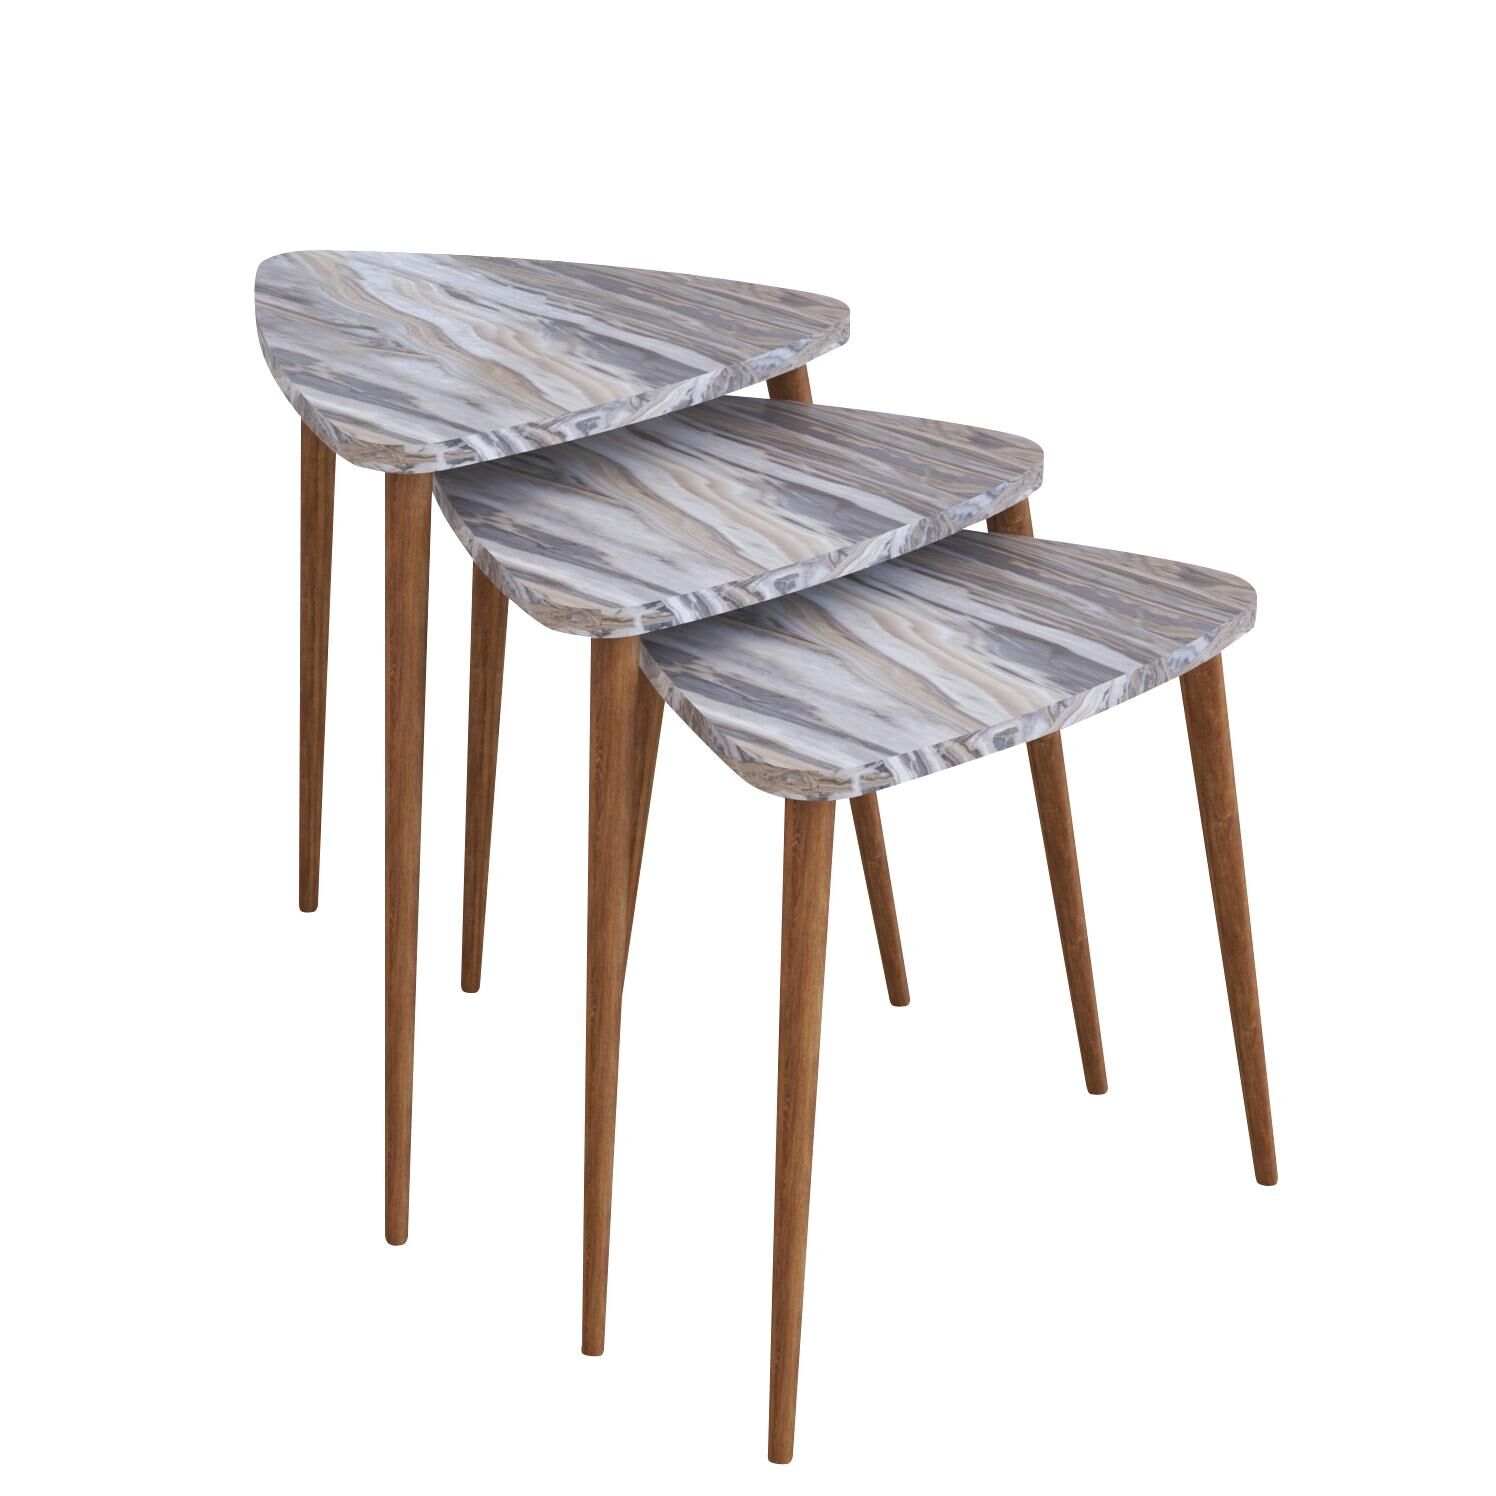 ABIDEMI Side Table Gray/Marble Look Chipboard/Wood 35x52/35x47/35x42cm Set 3Pcs